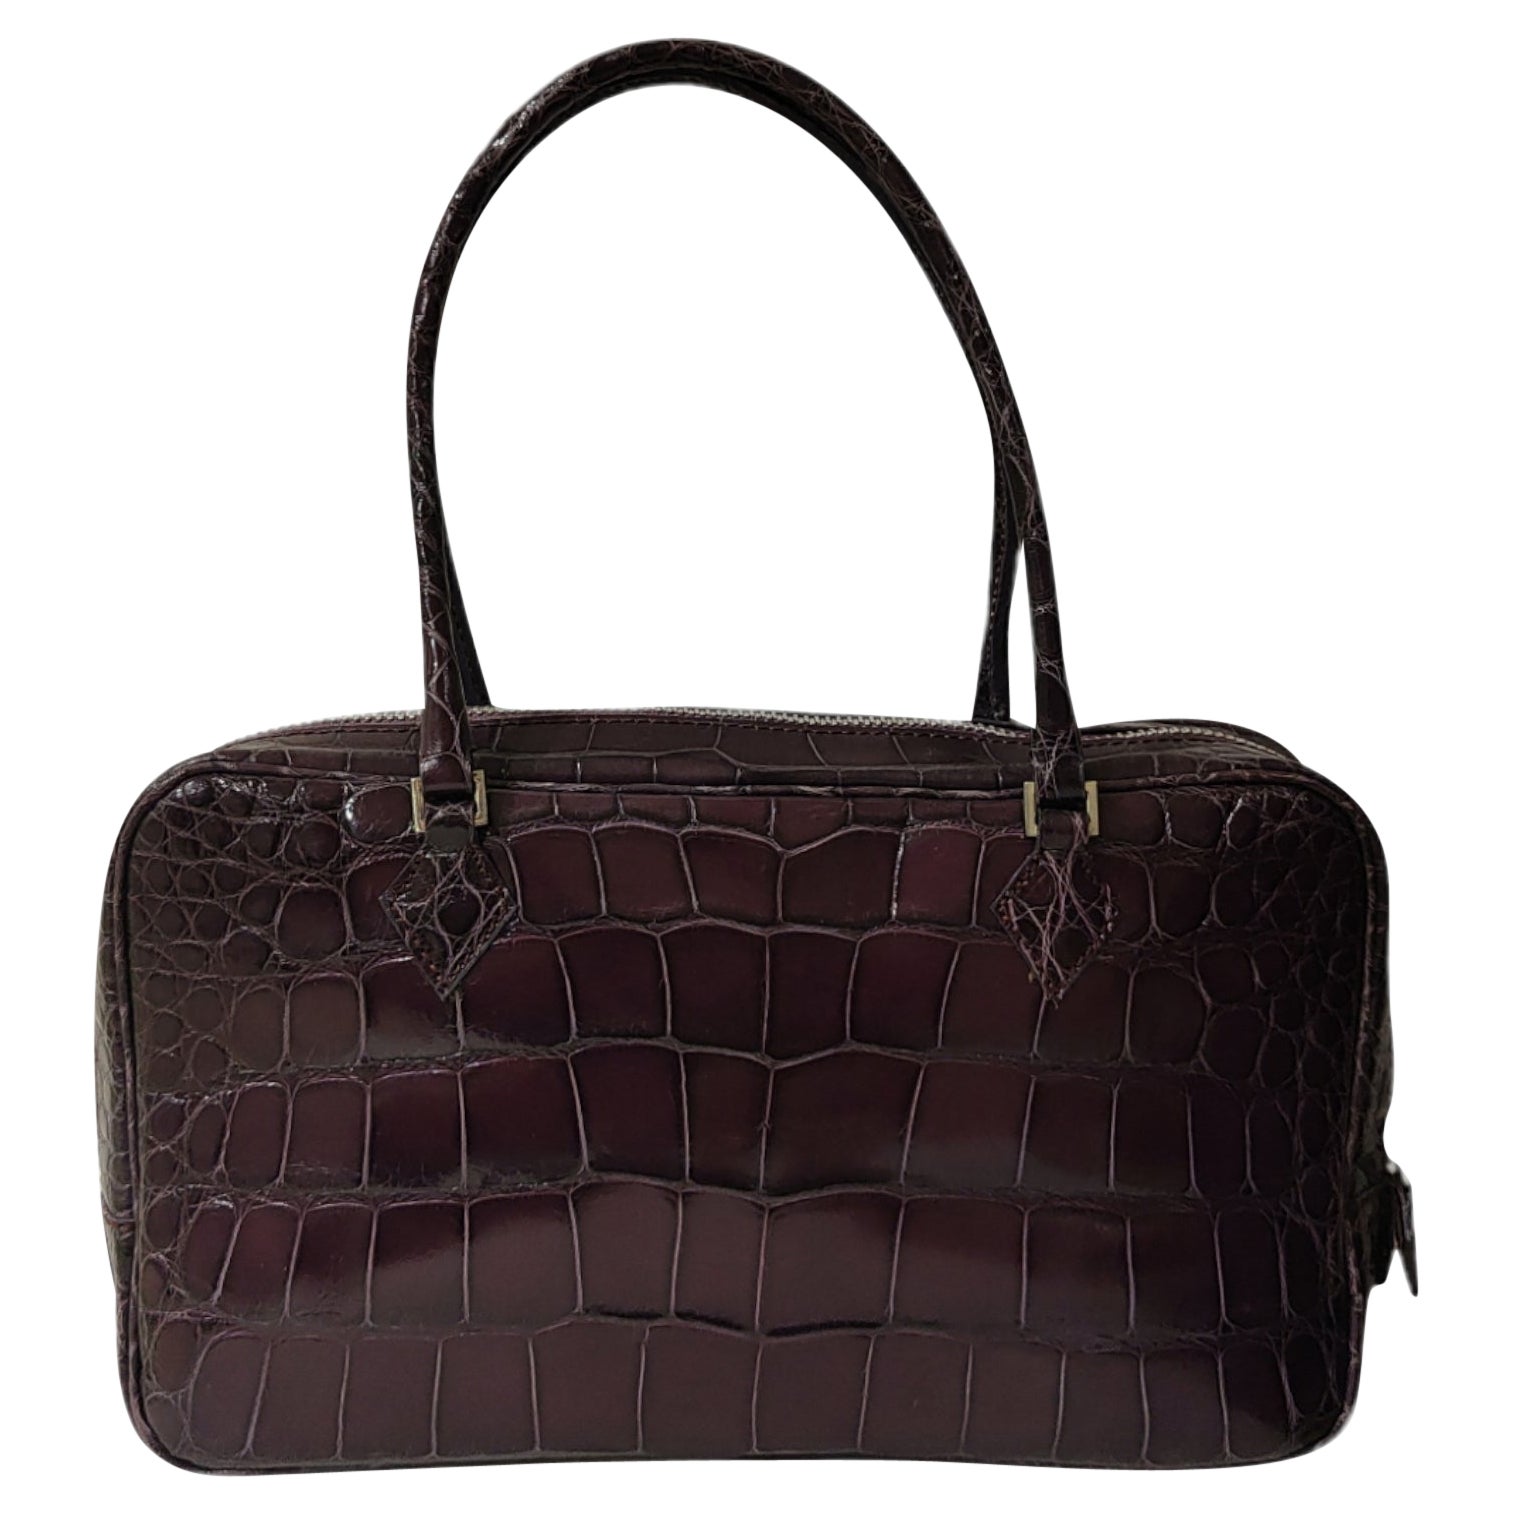 Sirni purple crocodile handbag - shoulder bag For Sale